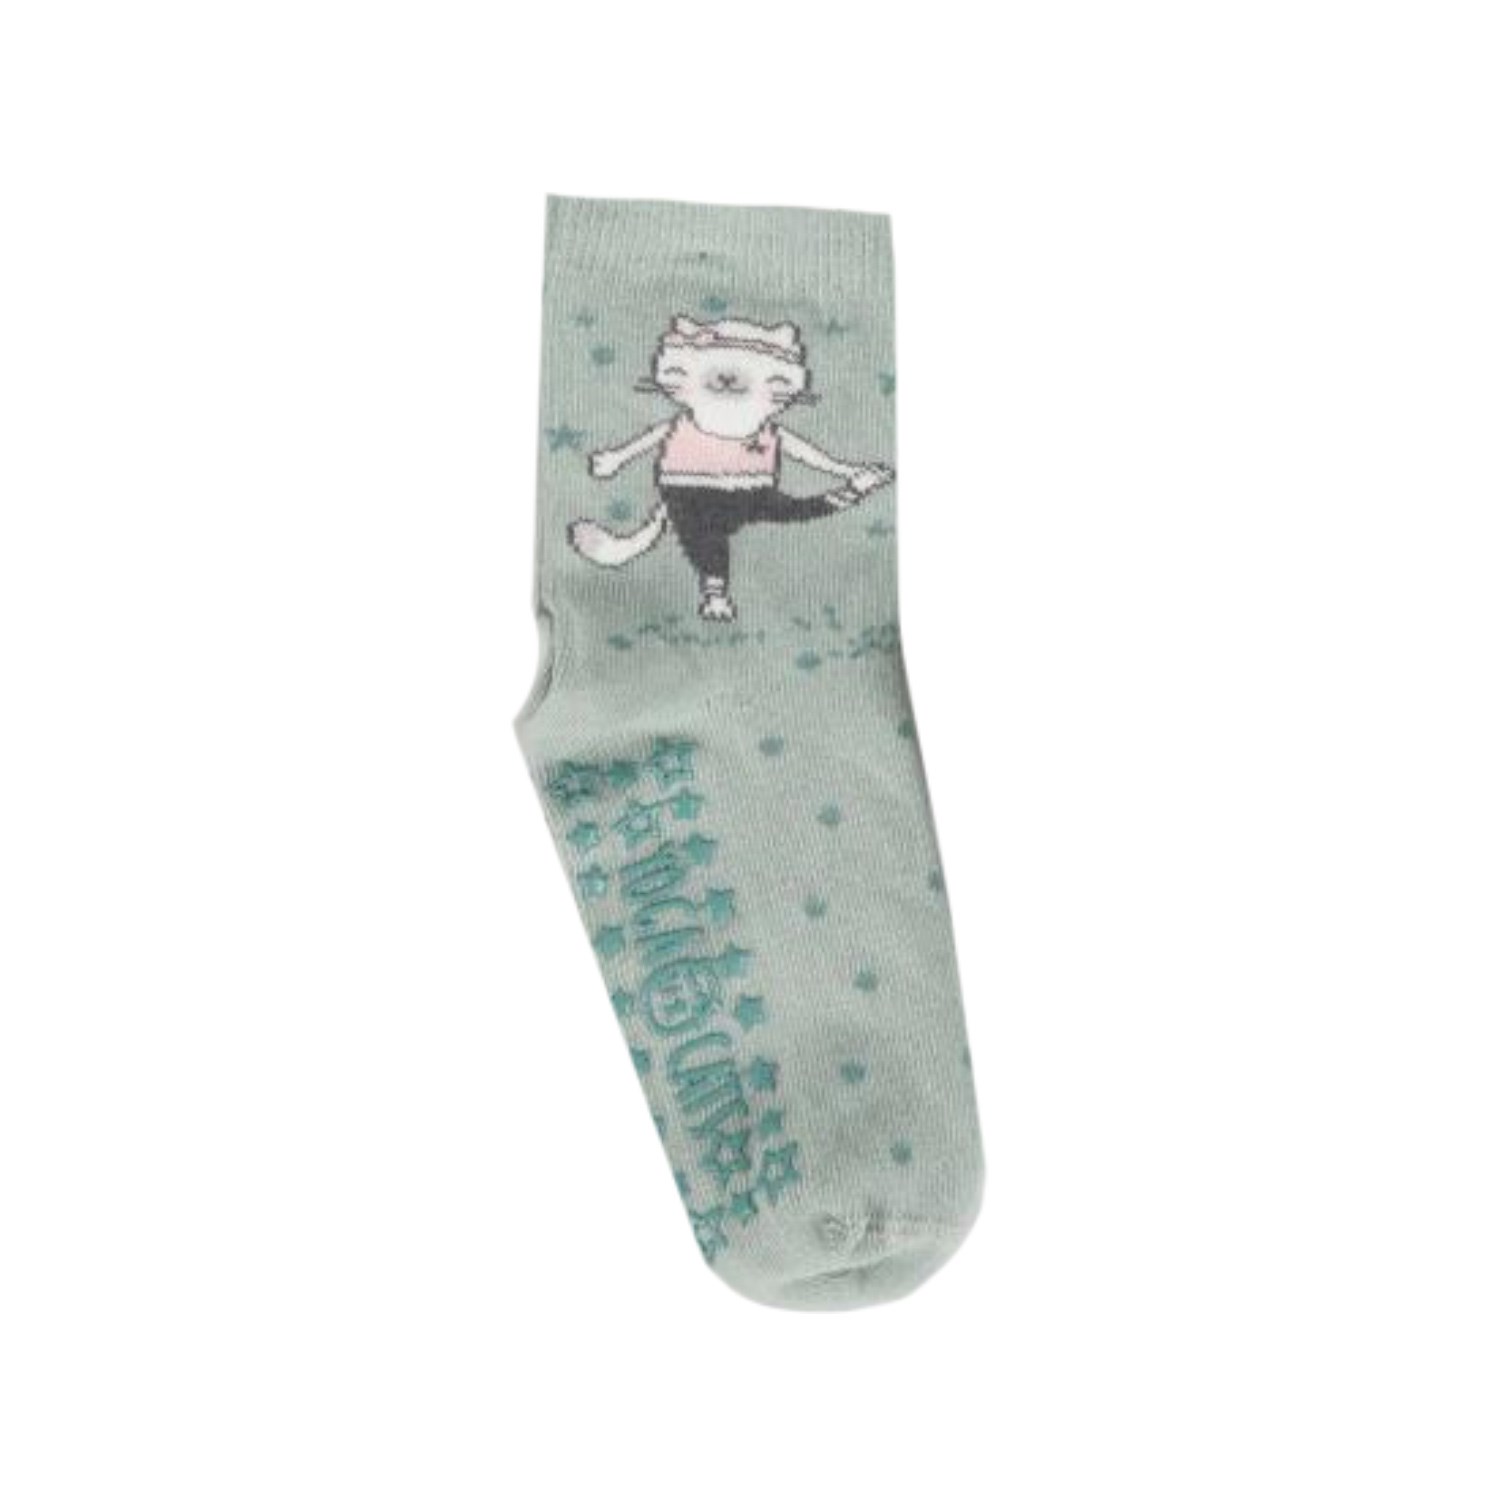 Katamino Wroom Abs'li Kız Bebek Çorabı K20261 Mint